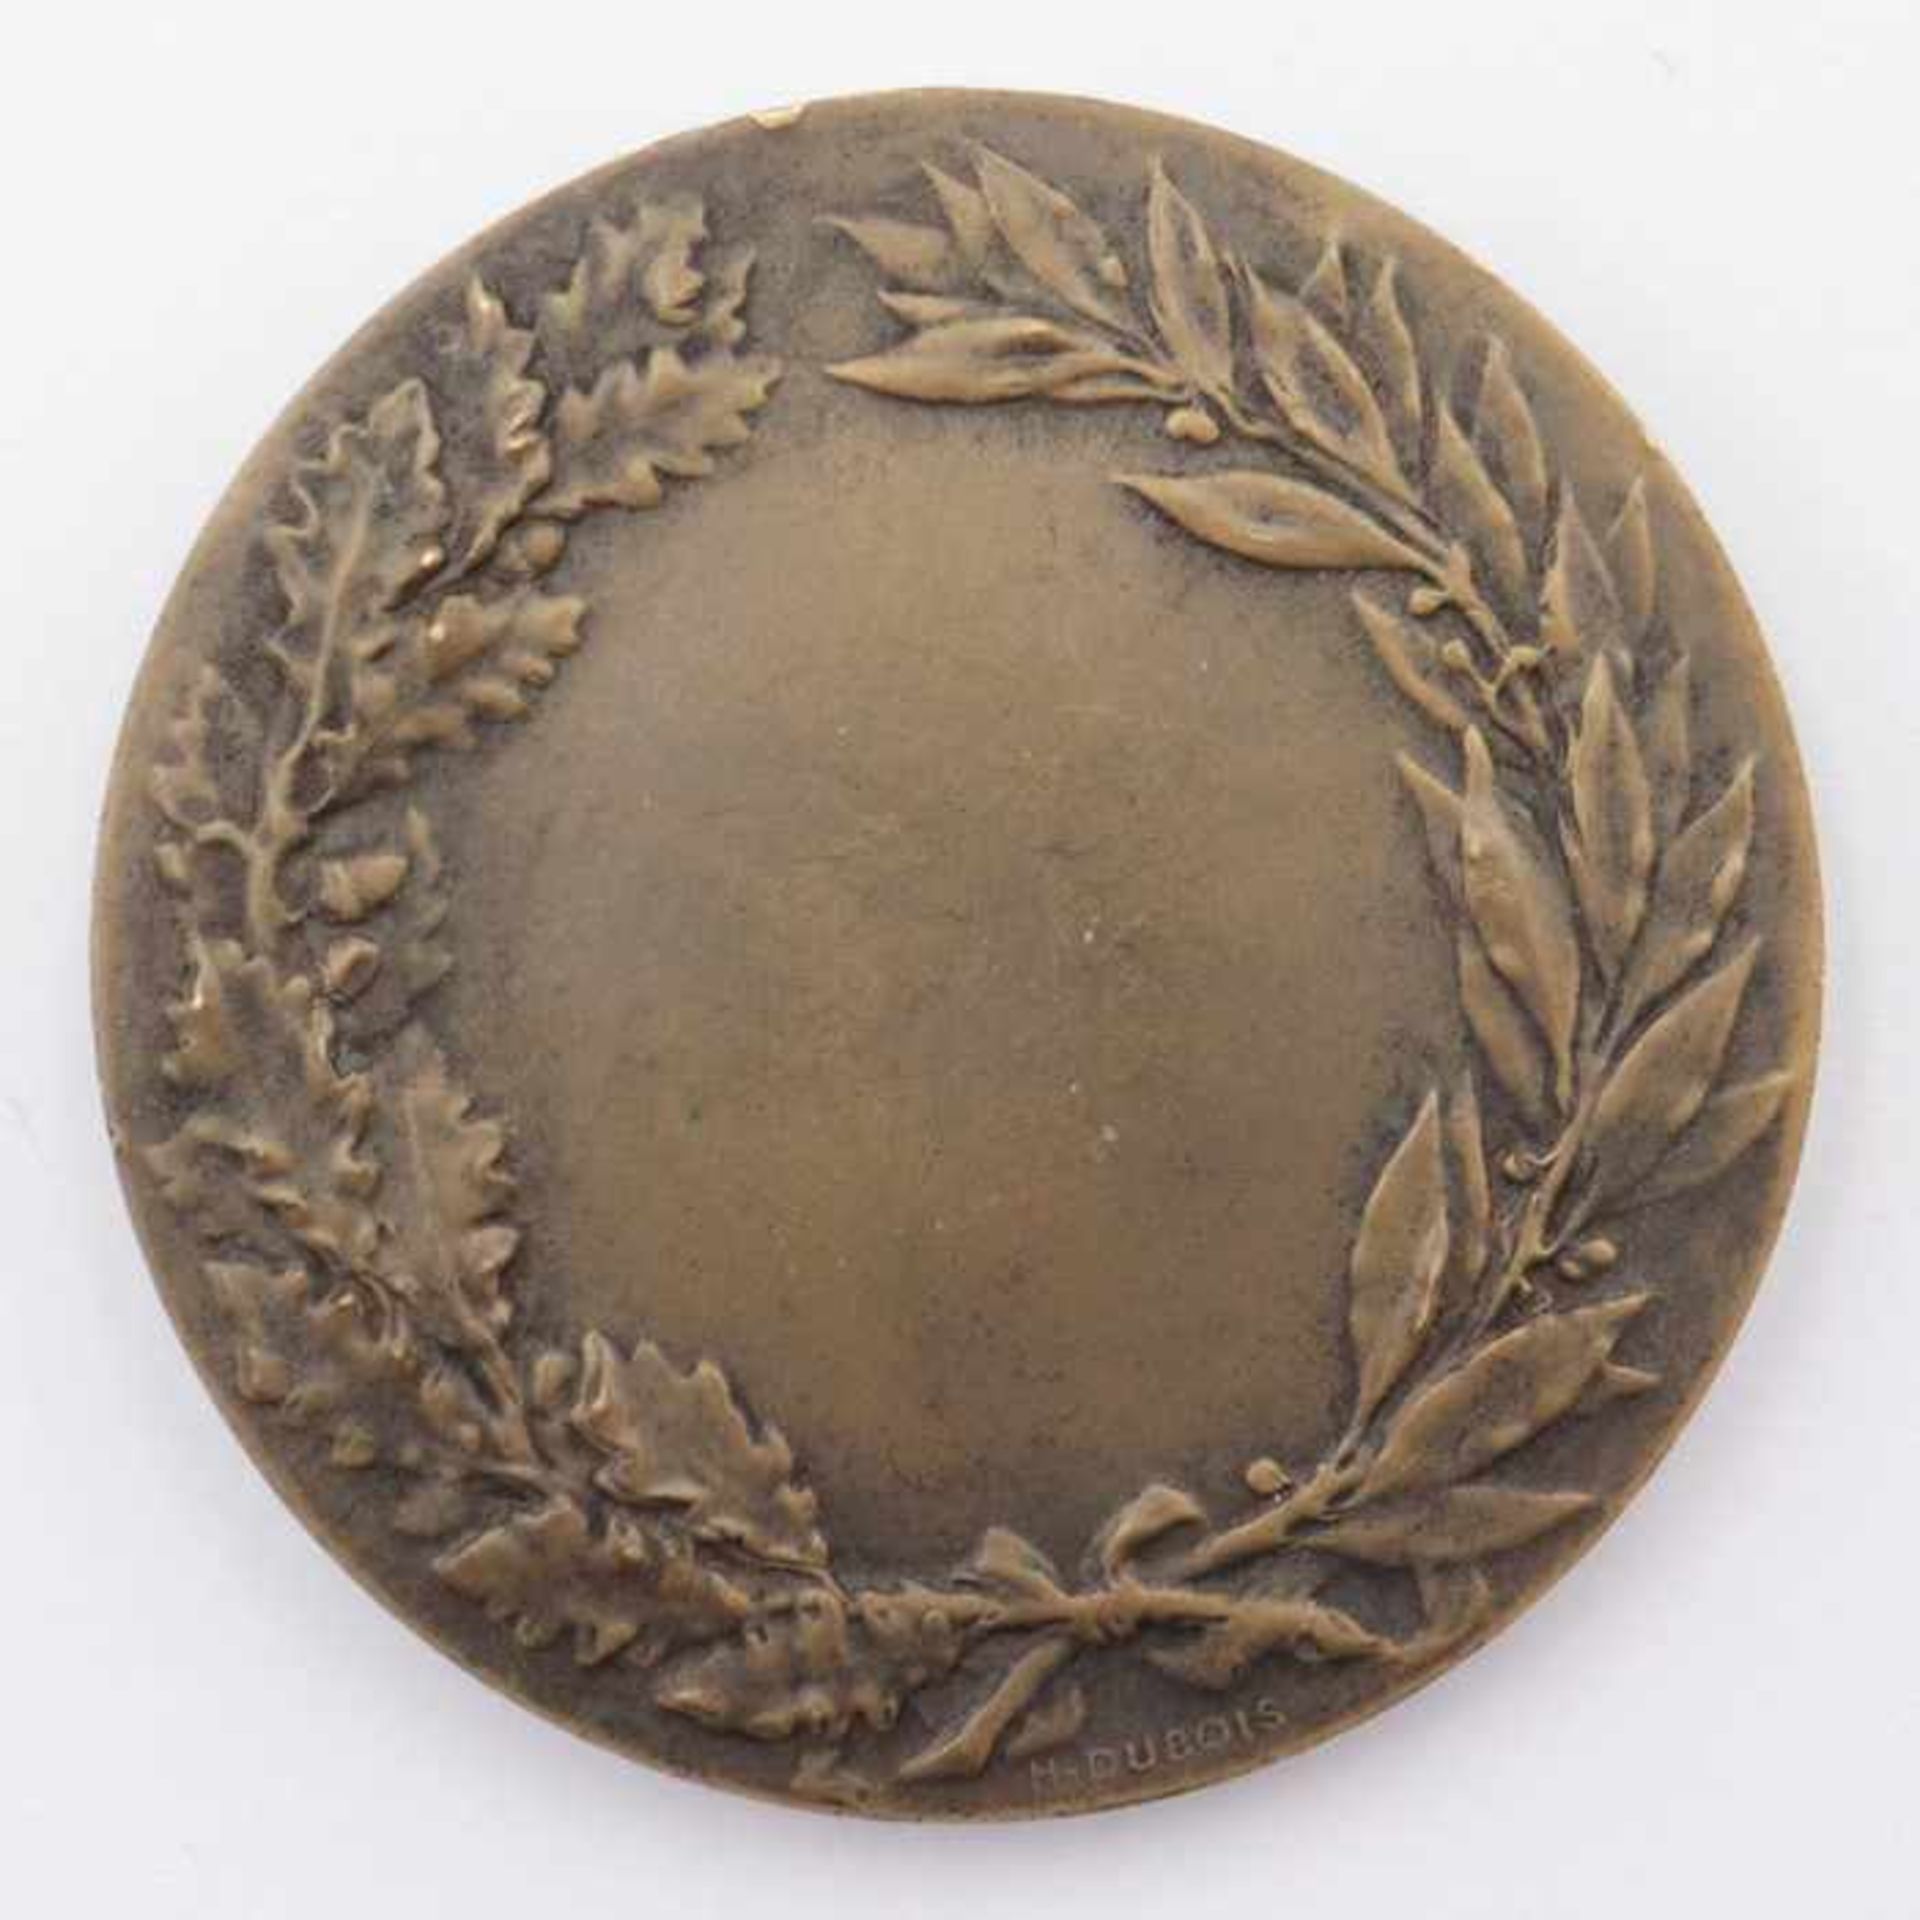 Medaille FrankreichHermes, rs. Siegeskranz, Metall, o.J., G 68 g, D 5 cm, vz- - -20.00 % buyer's - Bild 2 aus 2